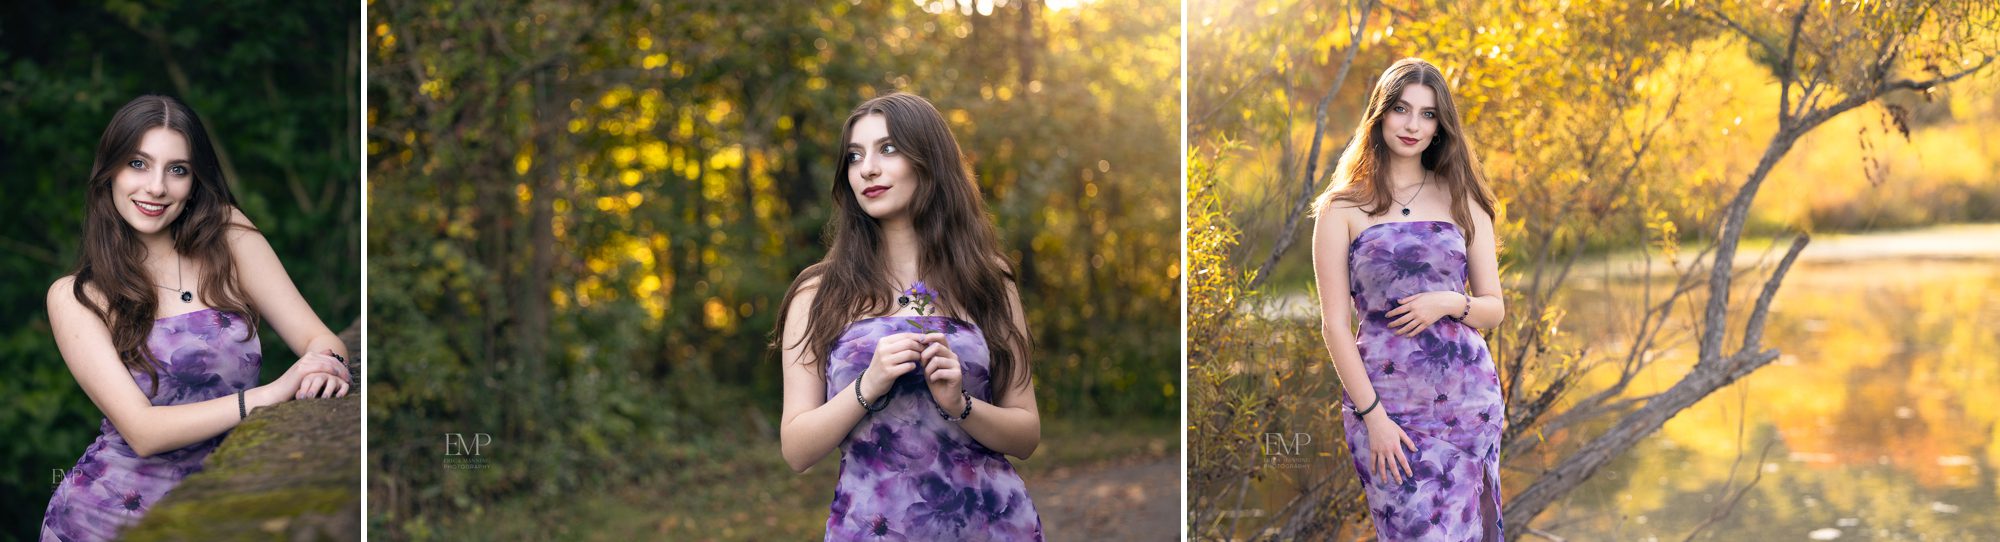 High school senior girl in purple dress in park during golden hour